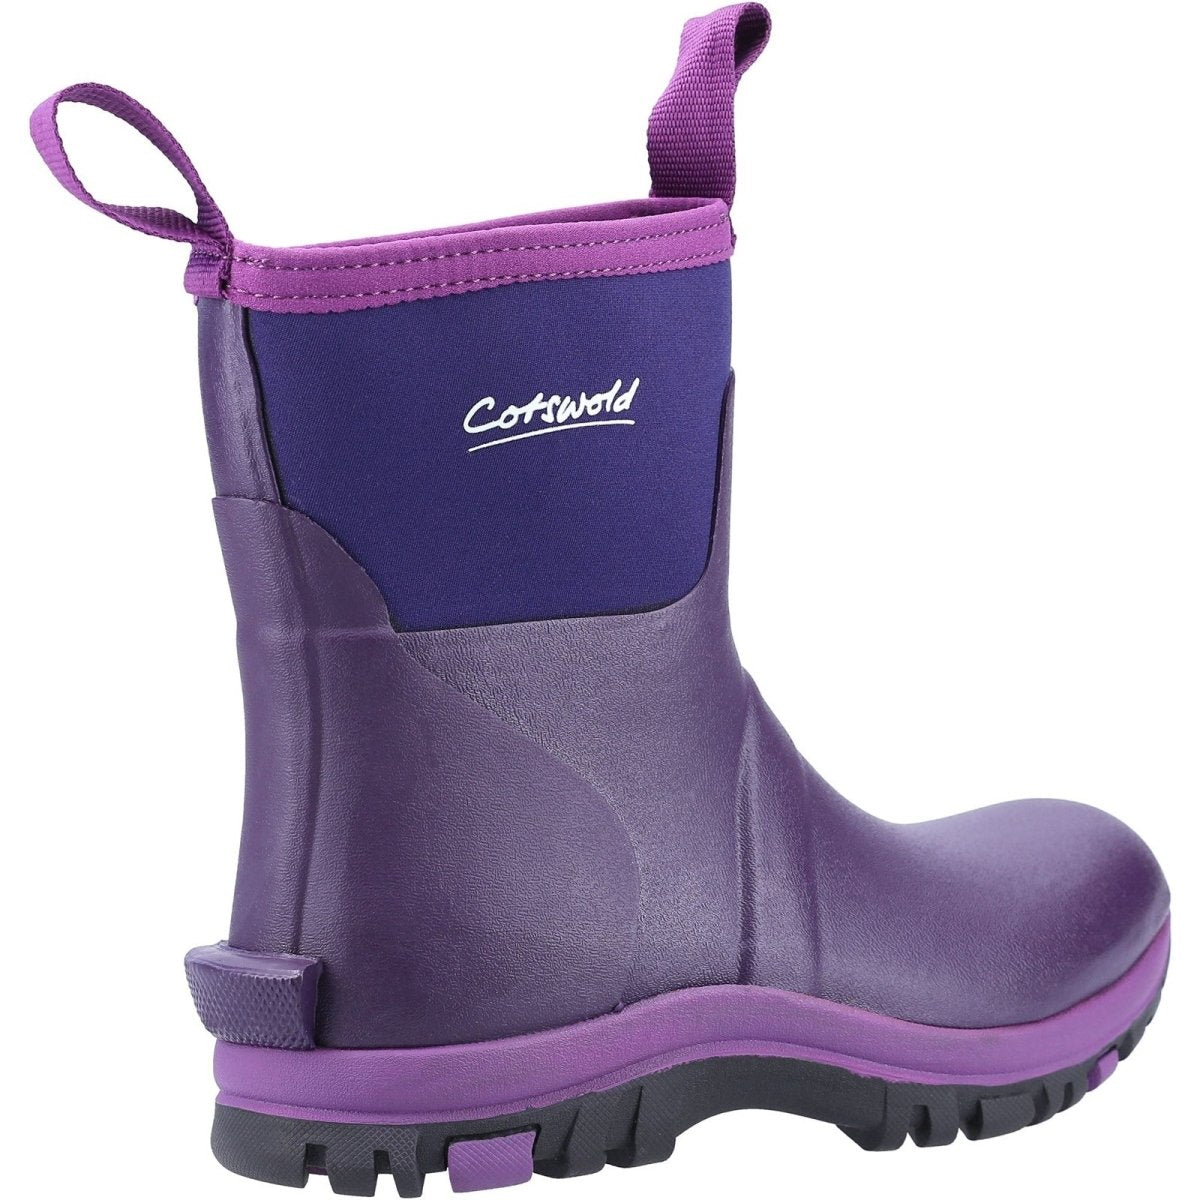 Cotswold Blaze Ladies Waterproof Neoprene Wellington Boots - Shoe Store Direct